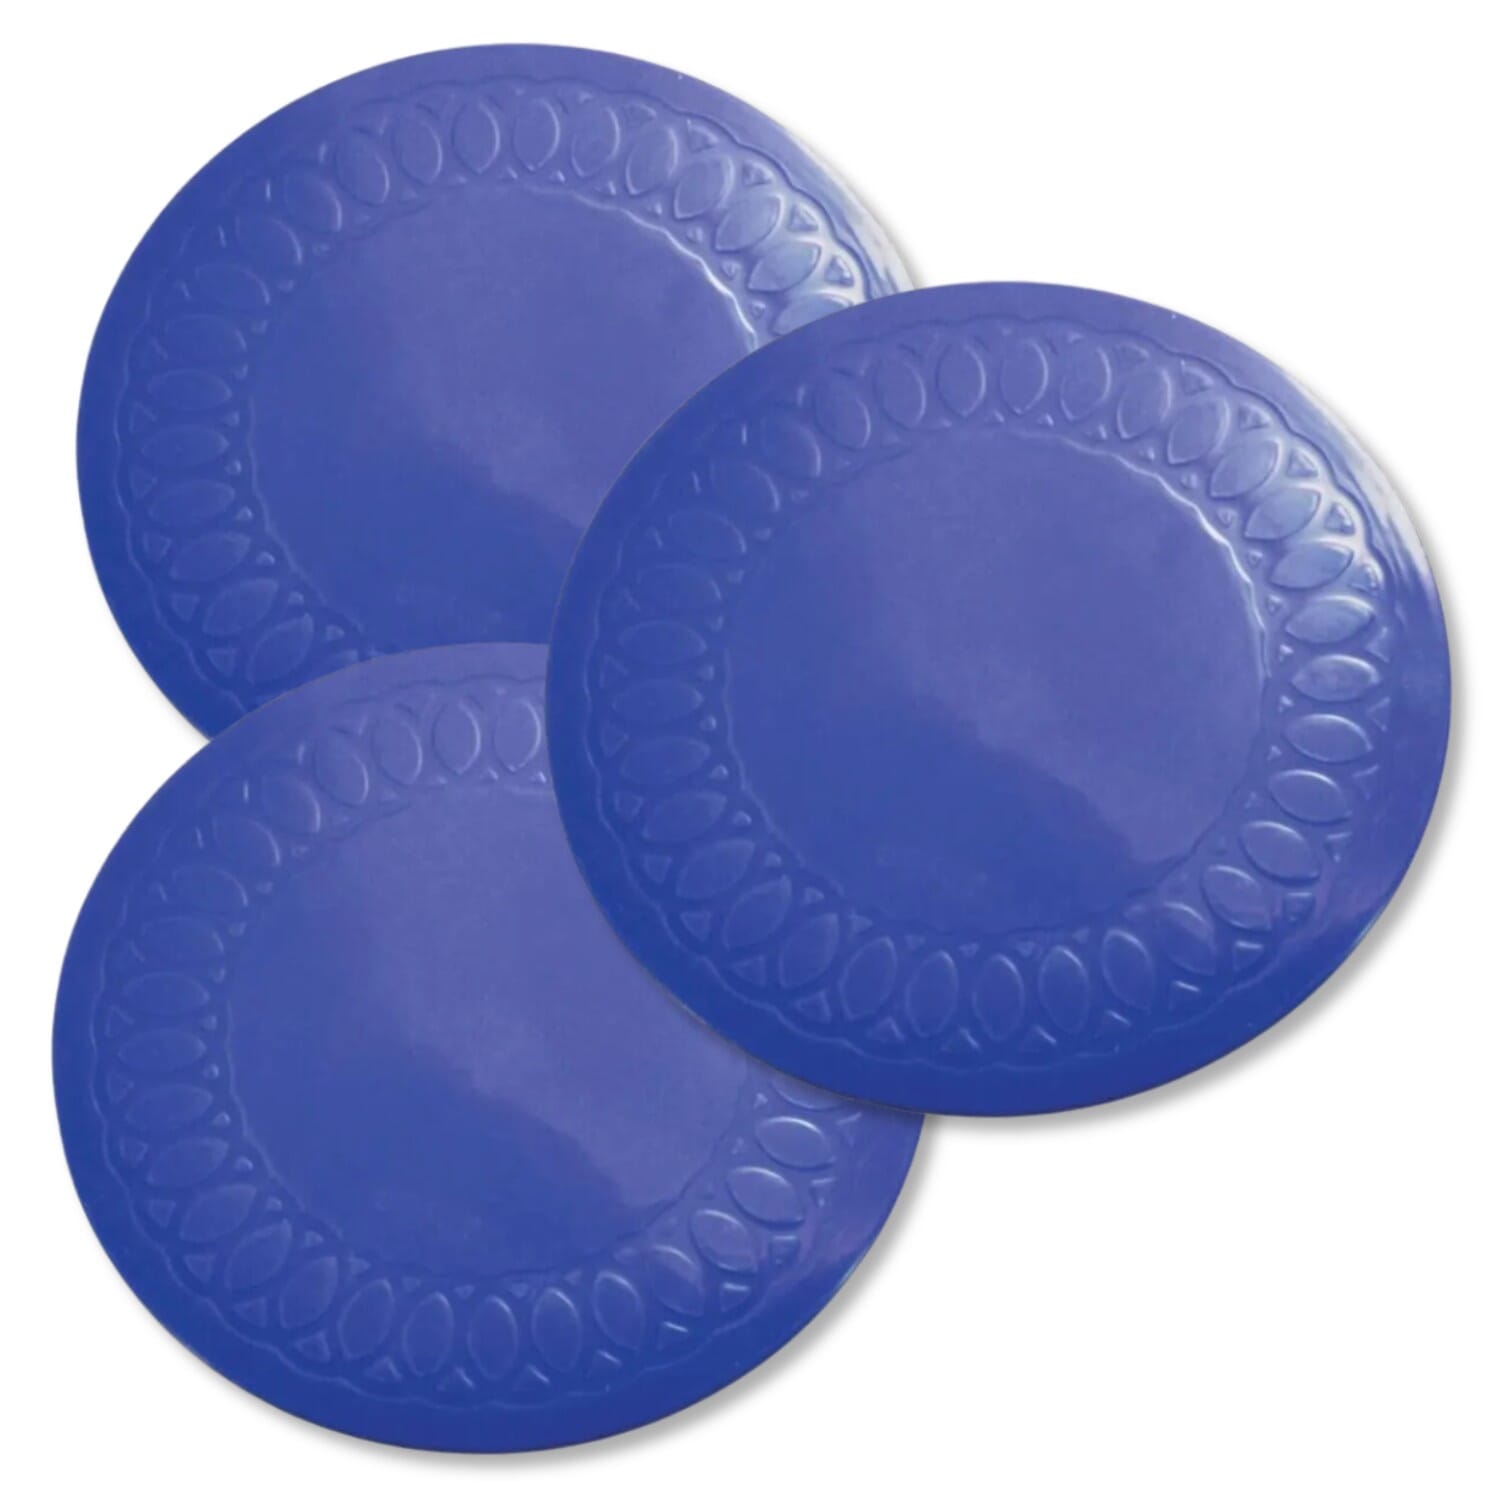 View Tenura Silicone Rubber Anti Slip Circular MatCoaster 19 cm Pack of 3 Blue information